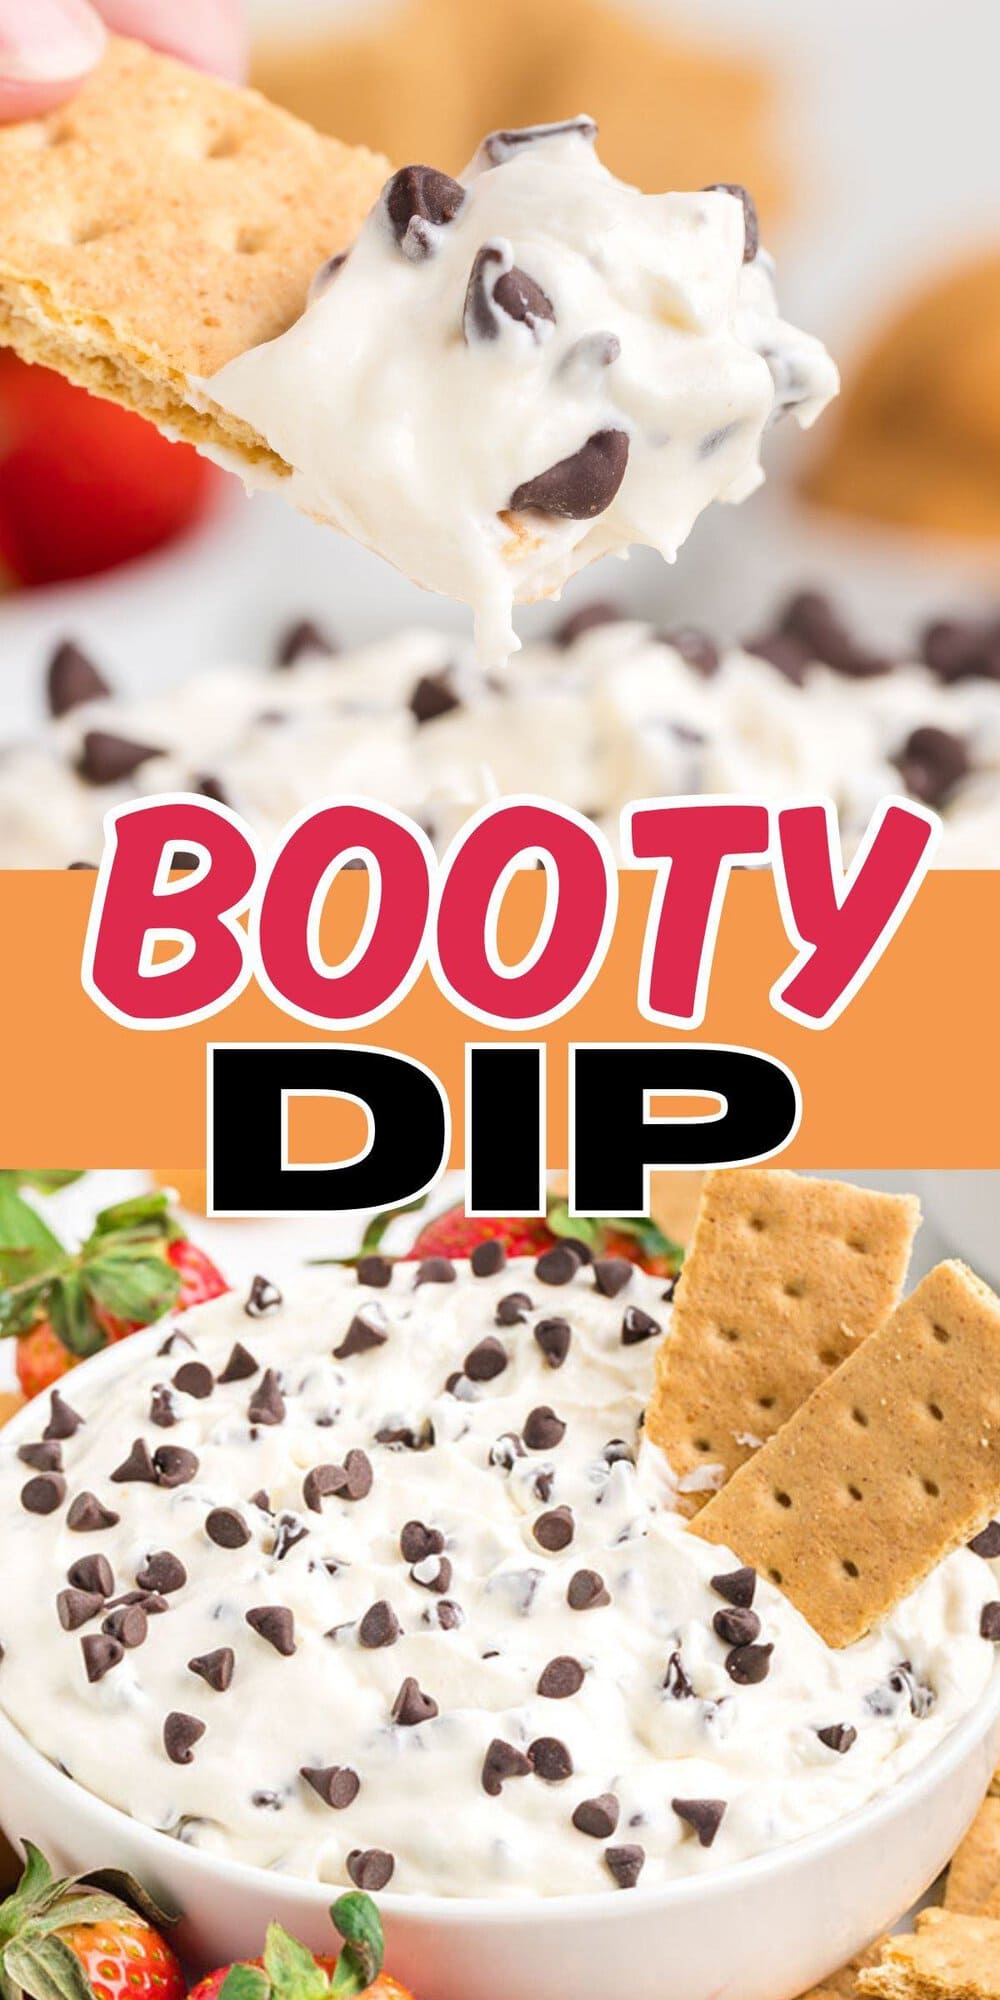 booty dip pins.